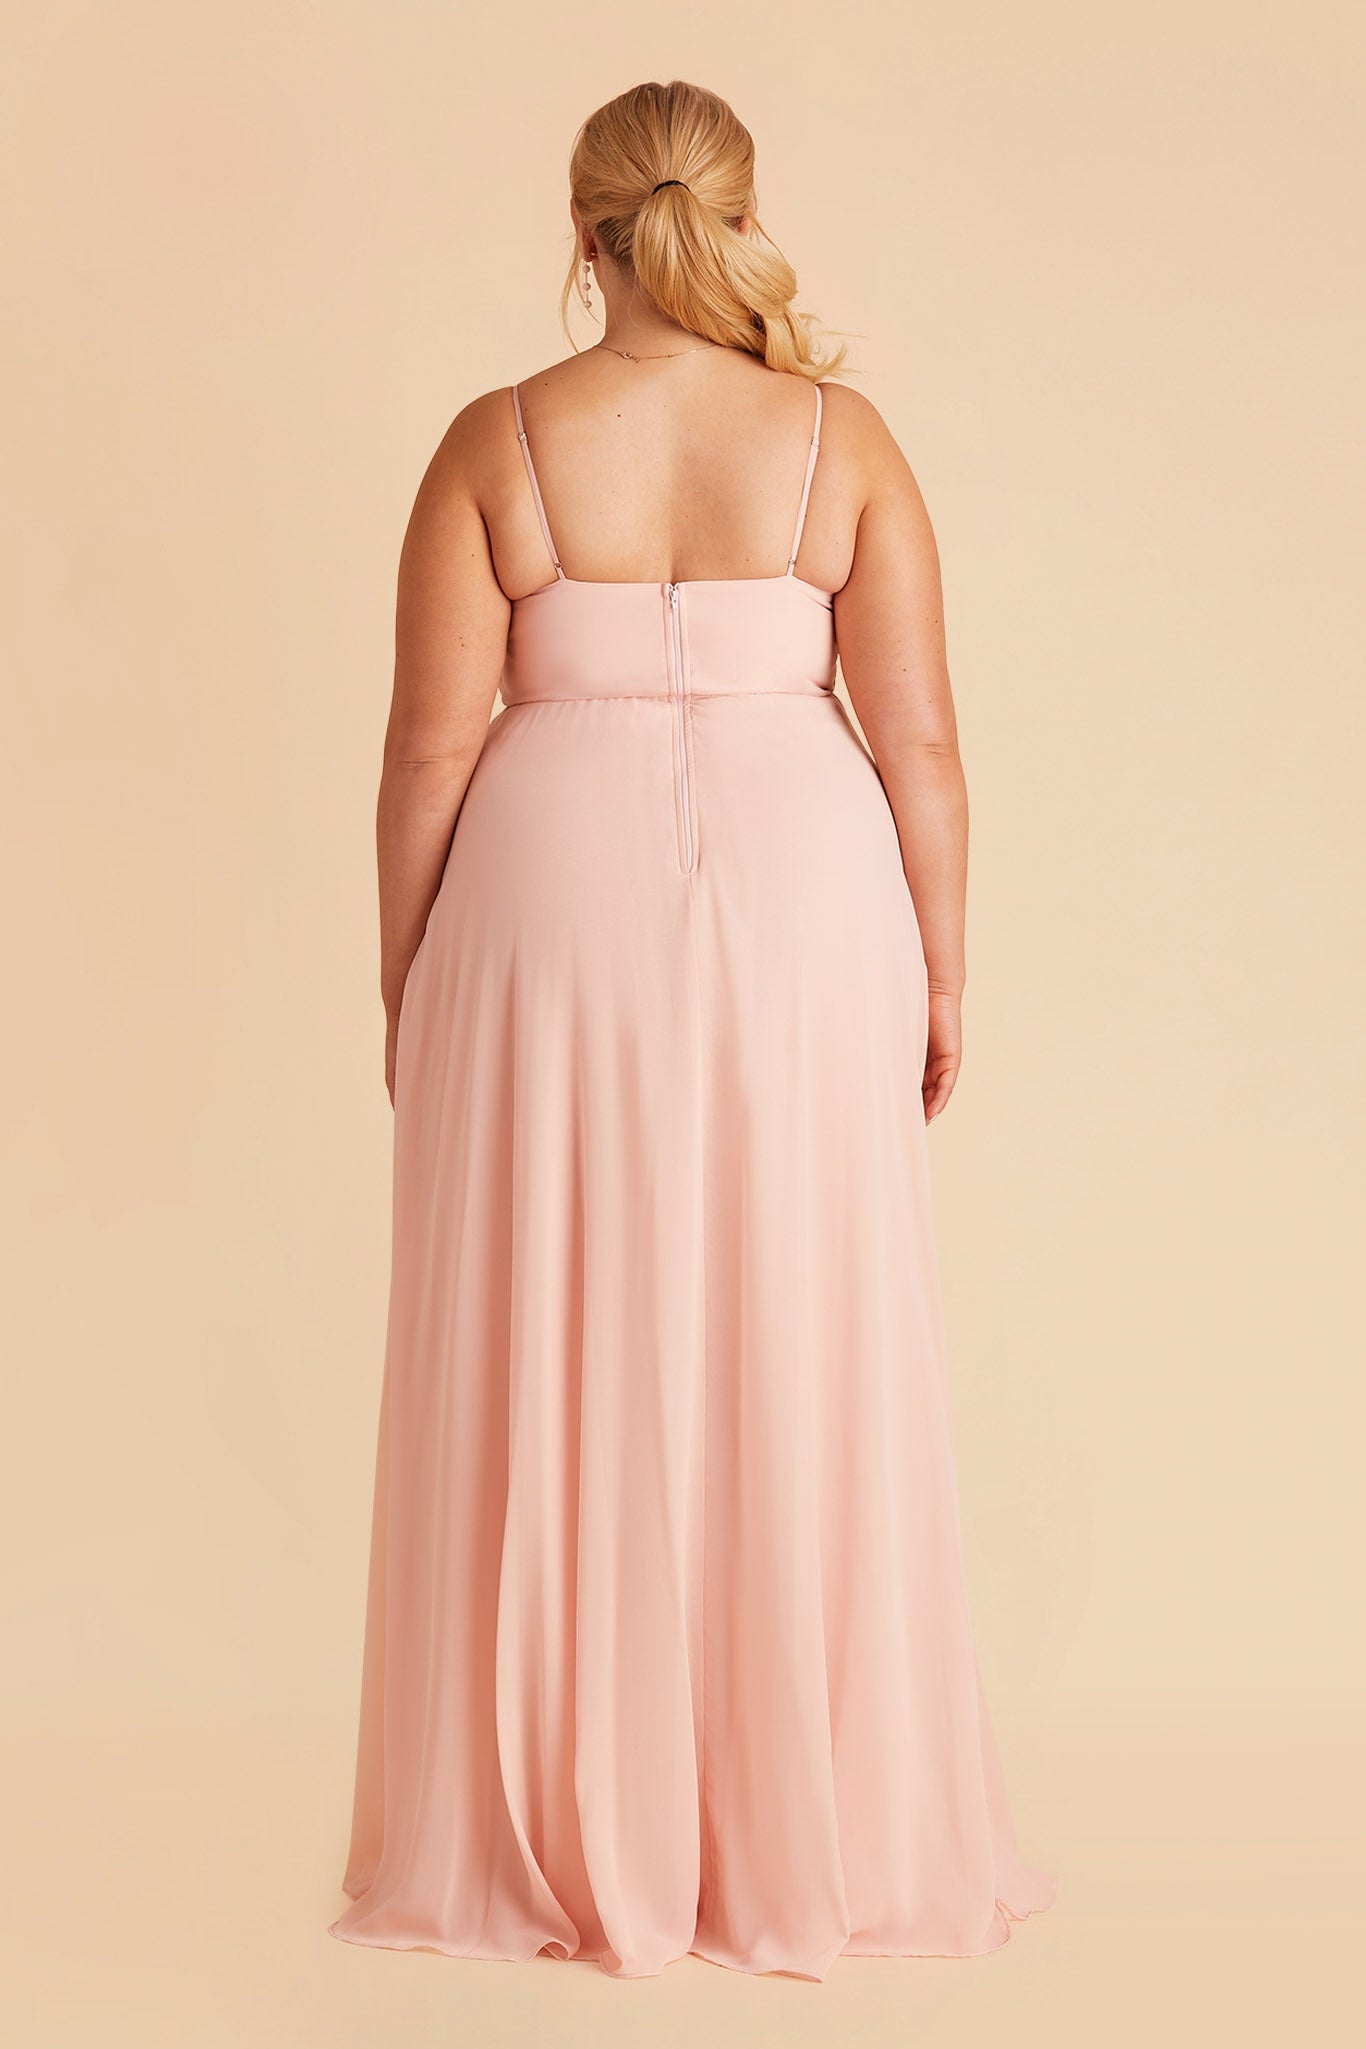 Kaia plus size bridesmaids dress in blush pink chiffon by Birdy Grey, back view